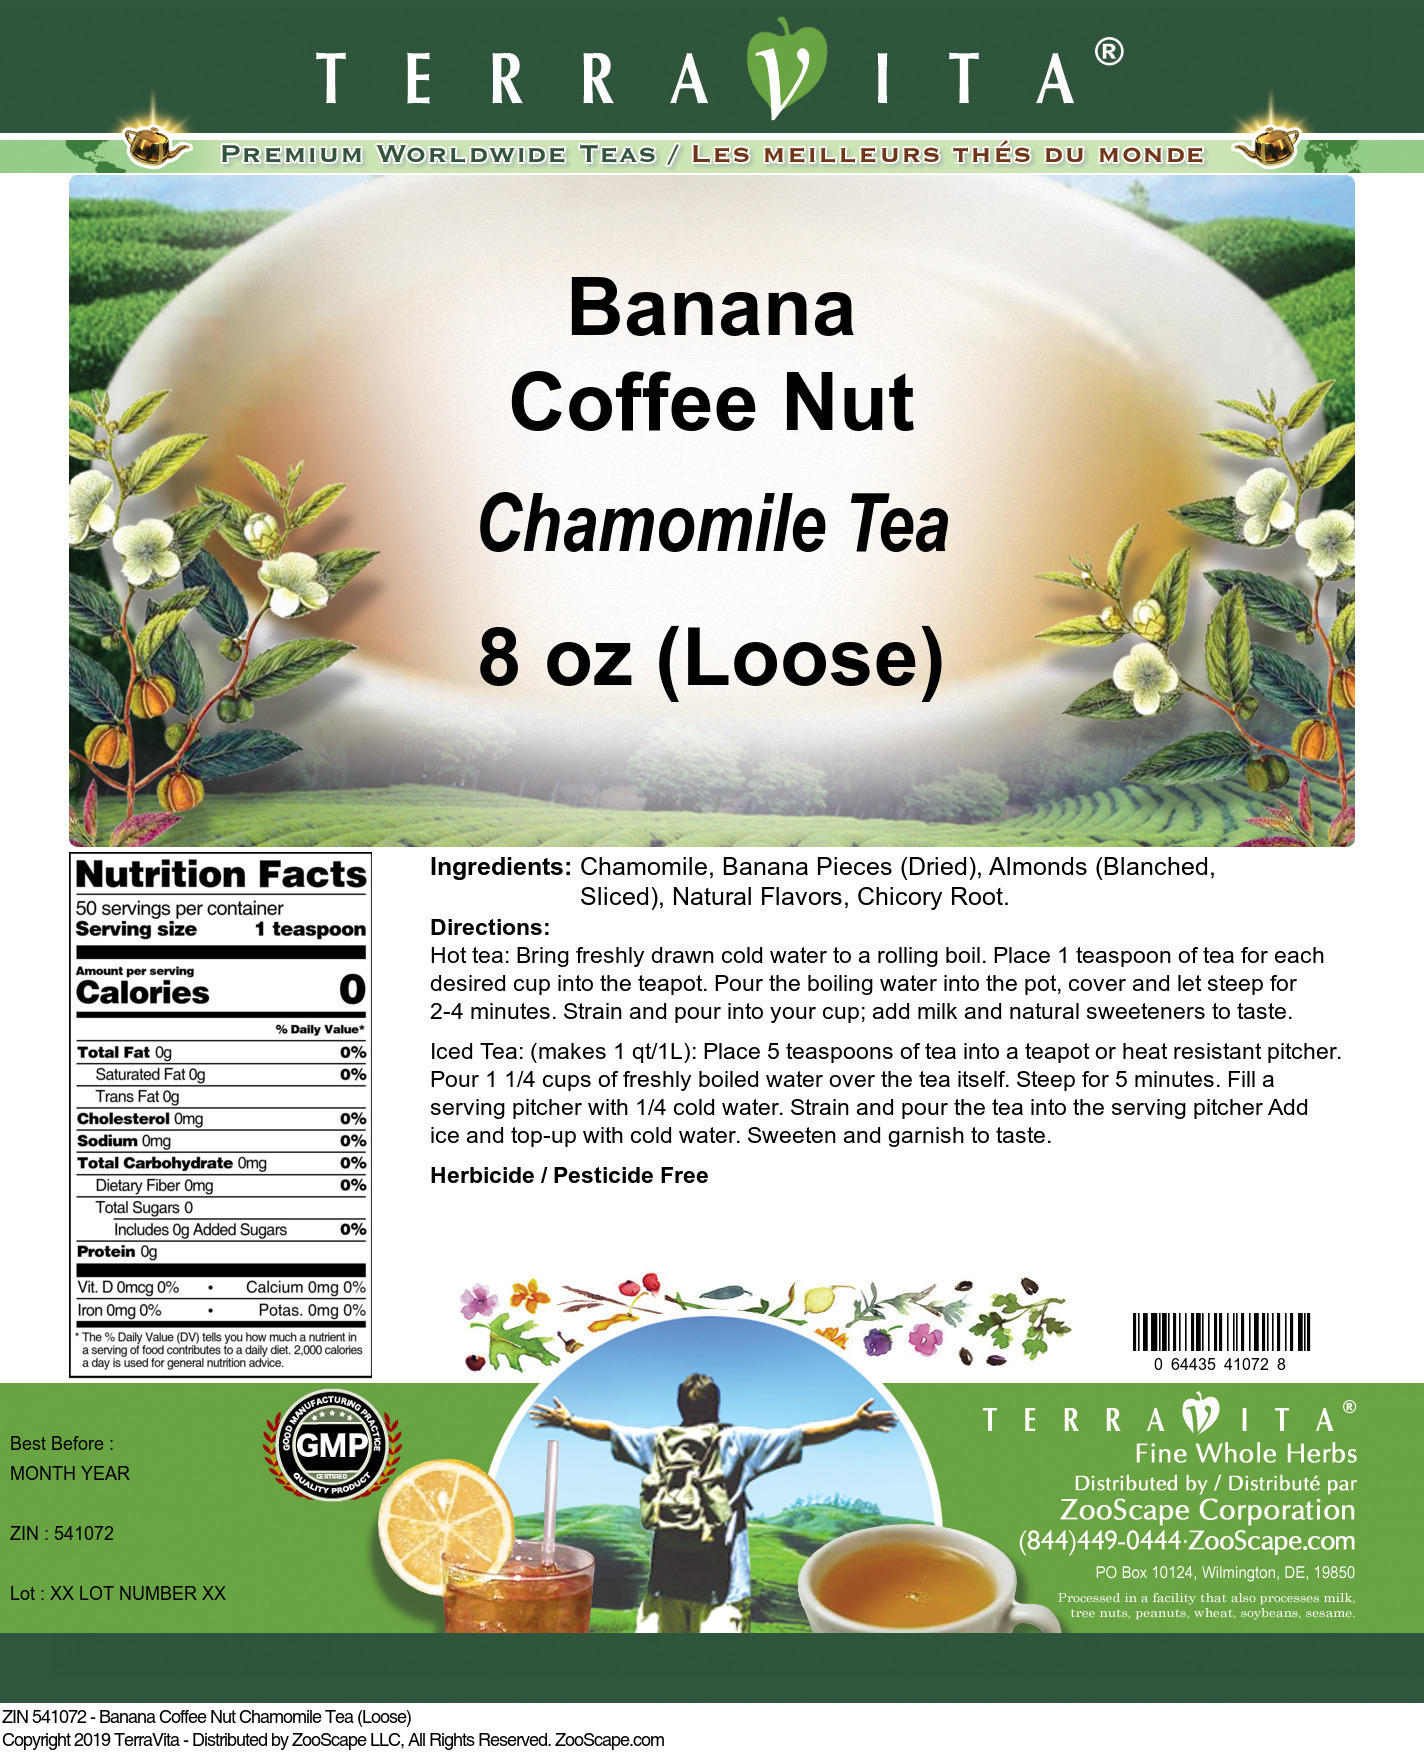 Banana Coffee Nut Chamomile Tea (Loose) - Label